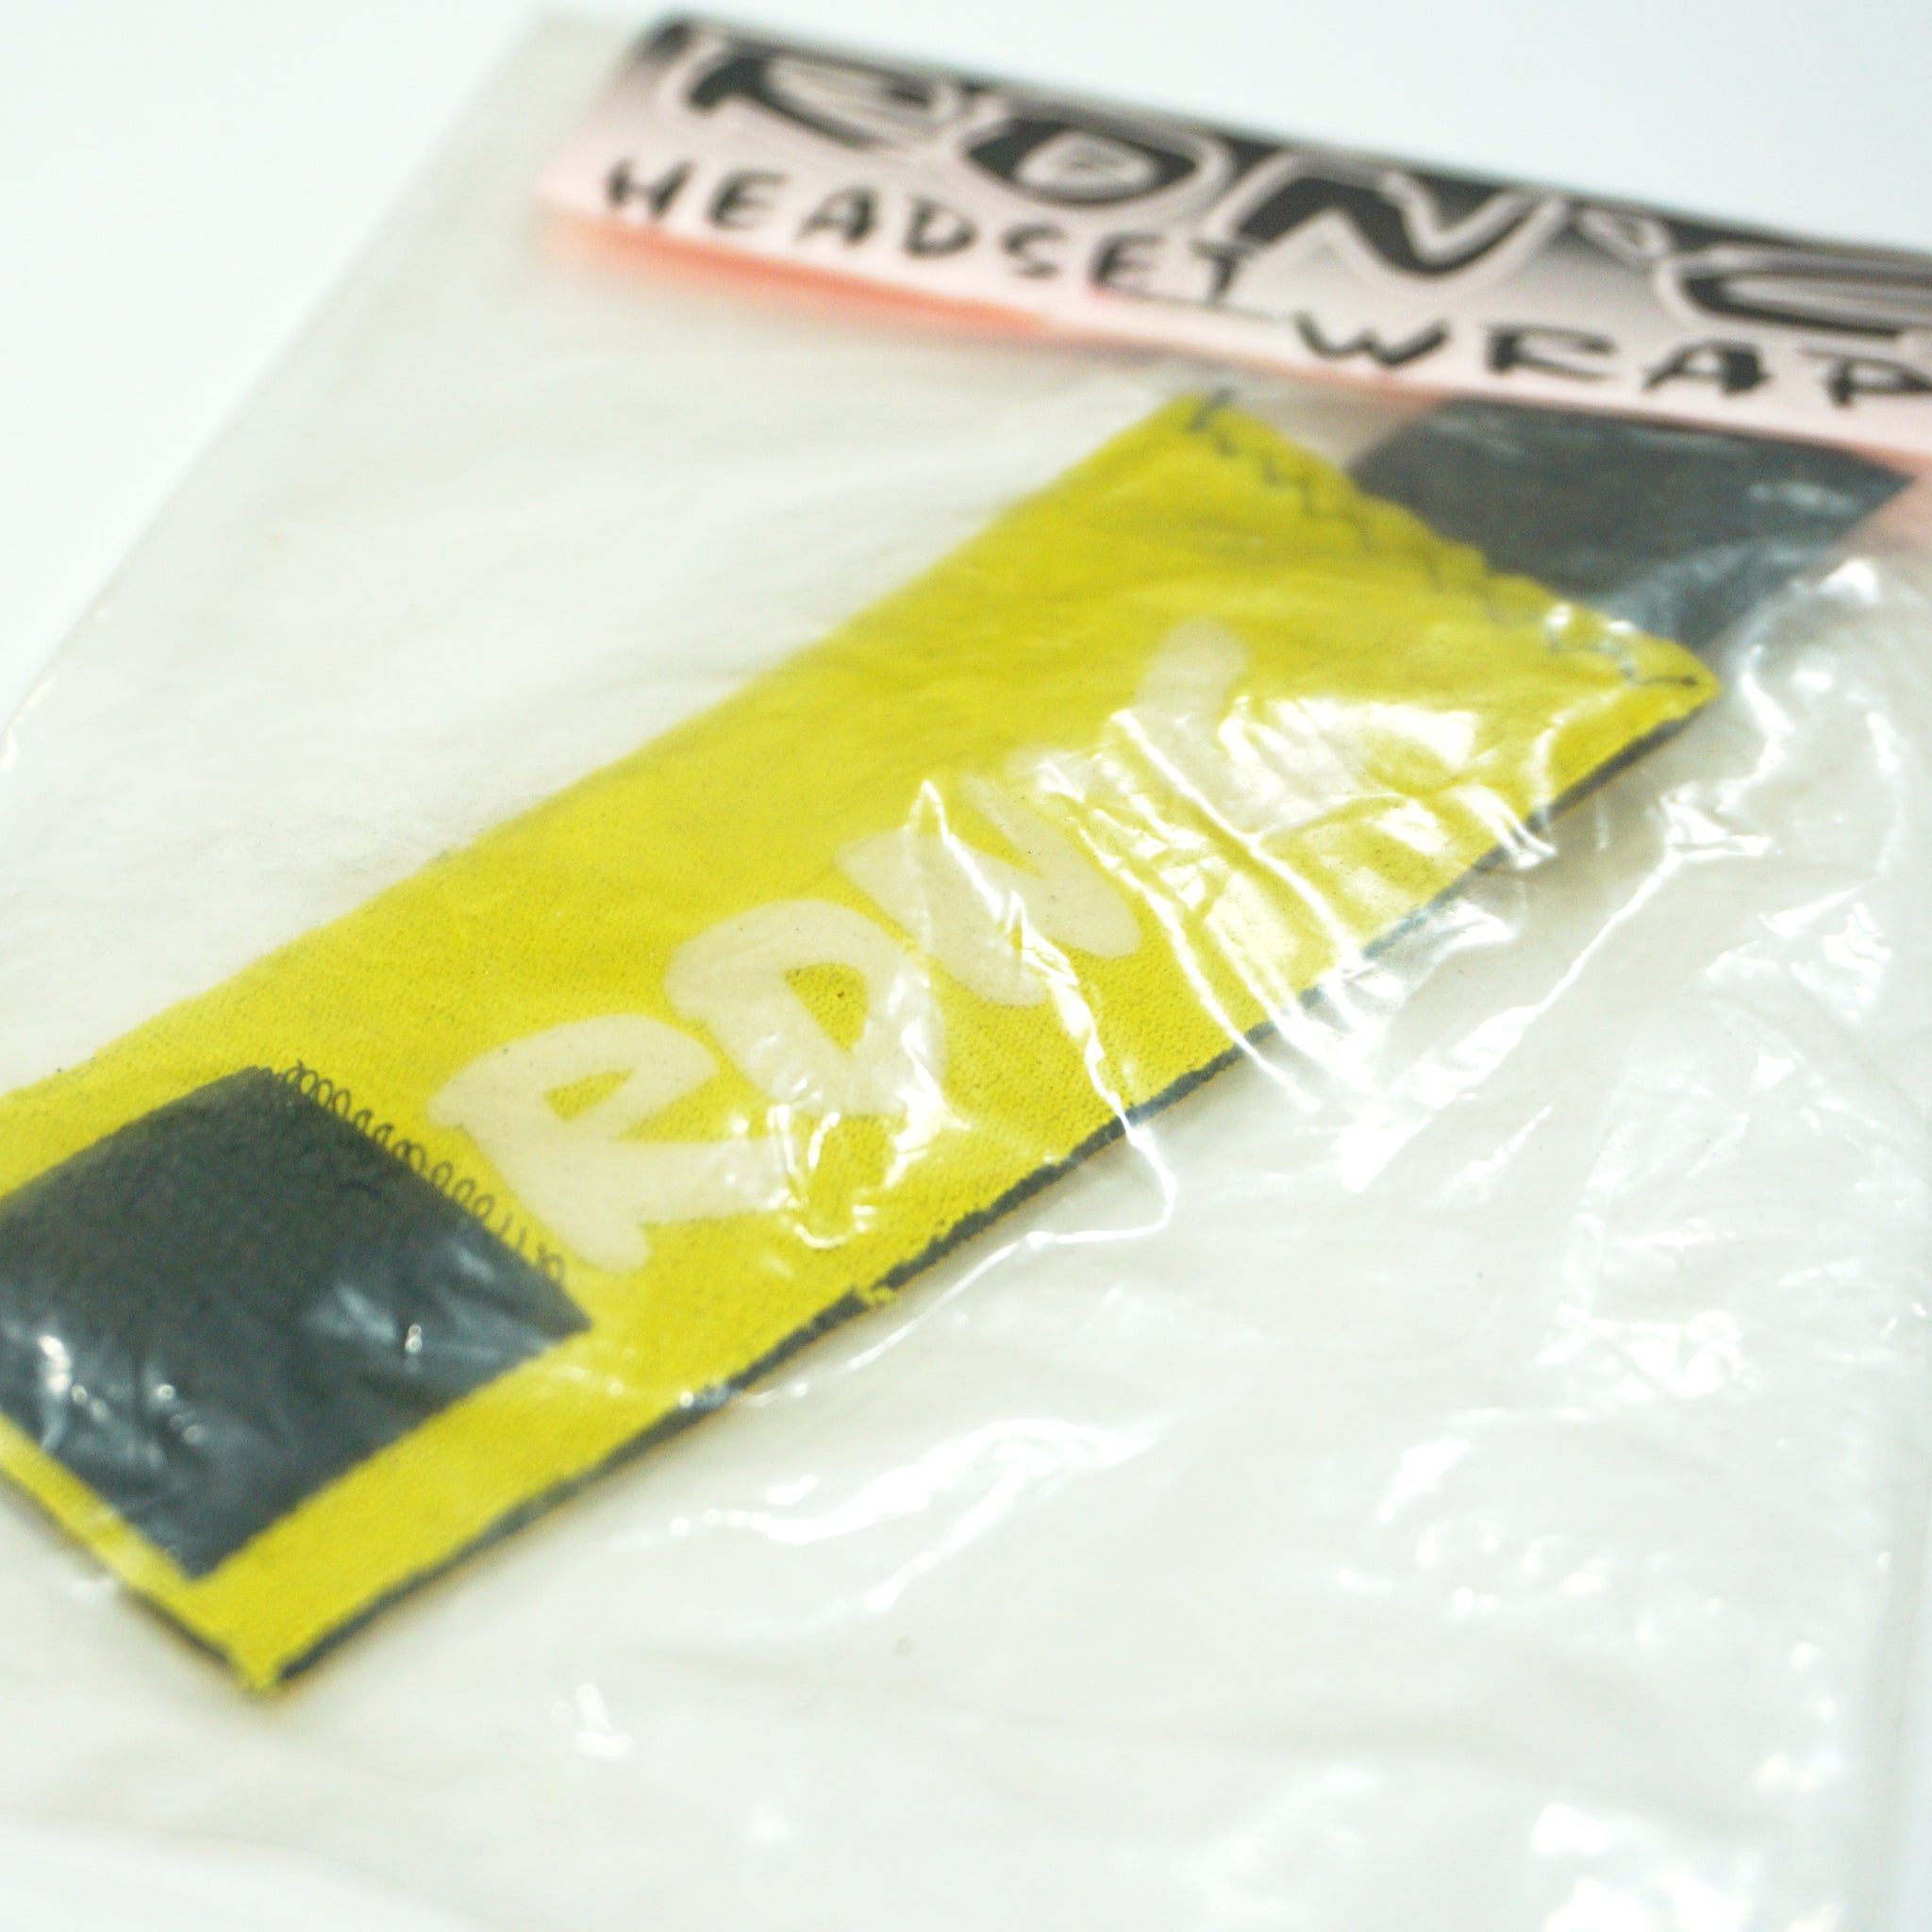 Ron'C - Headset Wrap (Yellow)